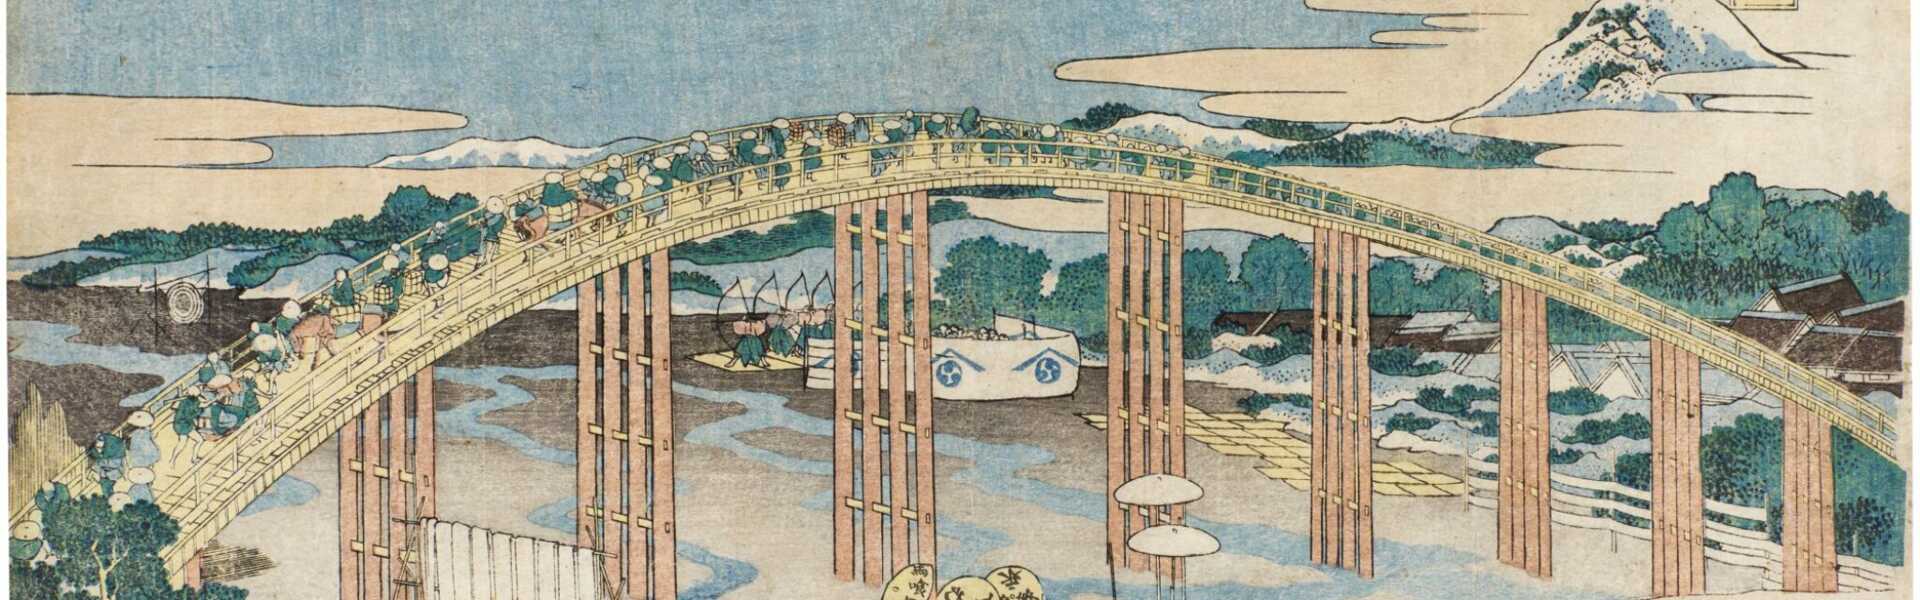 Katsushika Hokusai (1760-1849) | Yahagi Bridge at Okazaki on the Tokaido | Edo period, 19th century